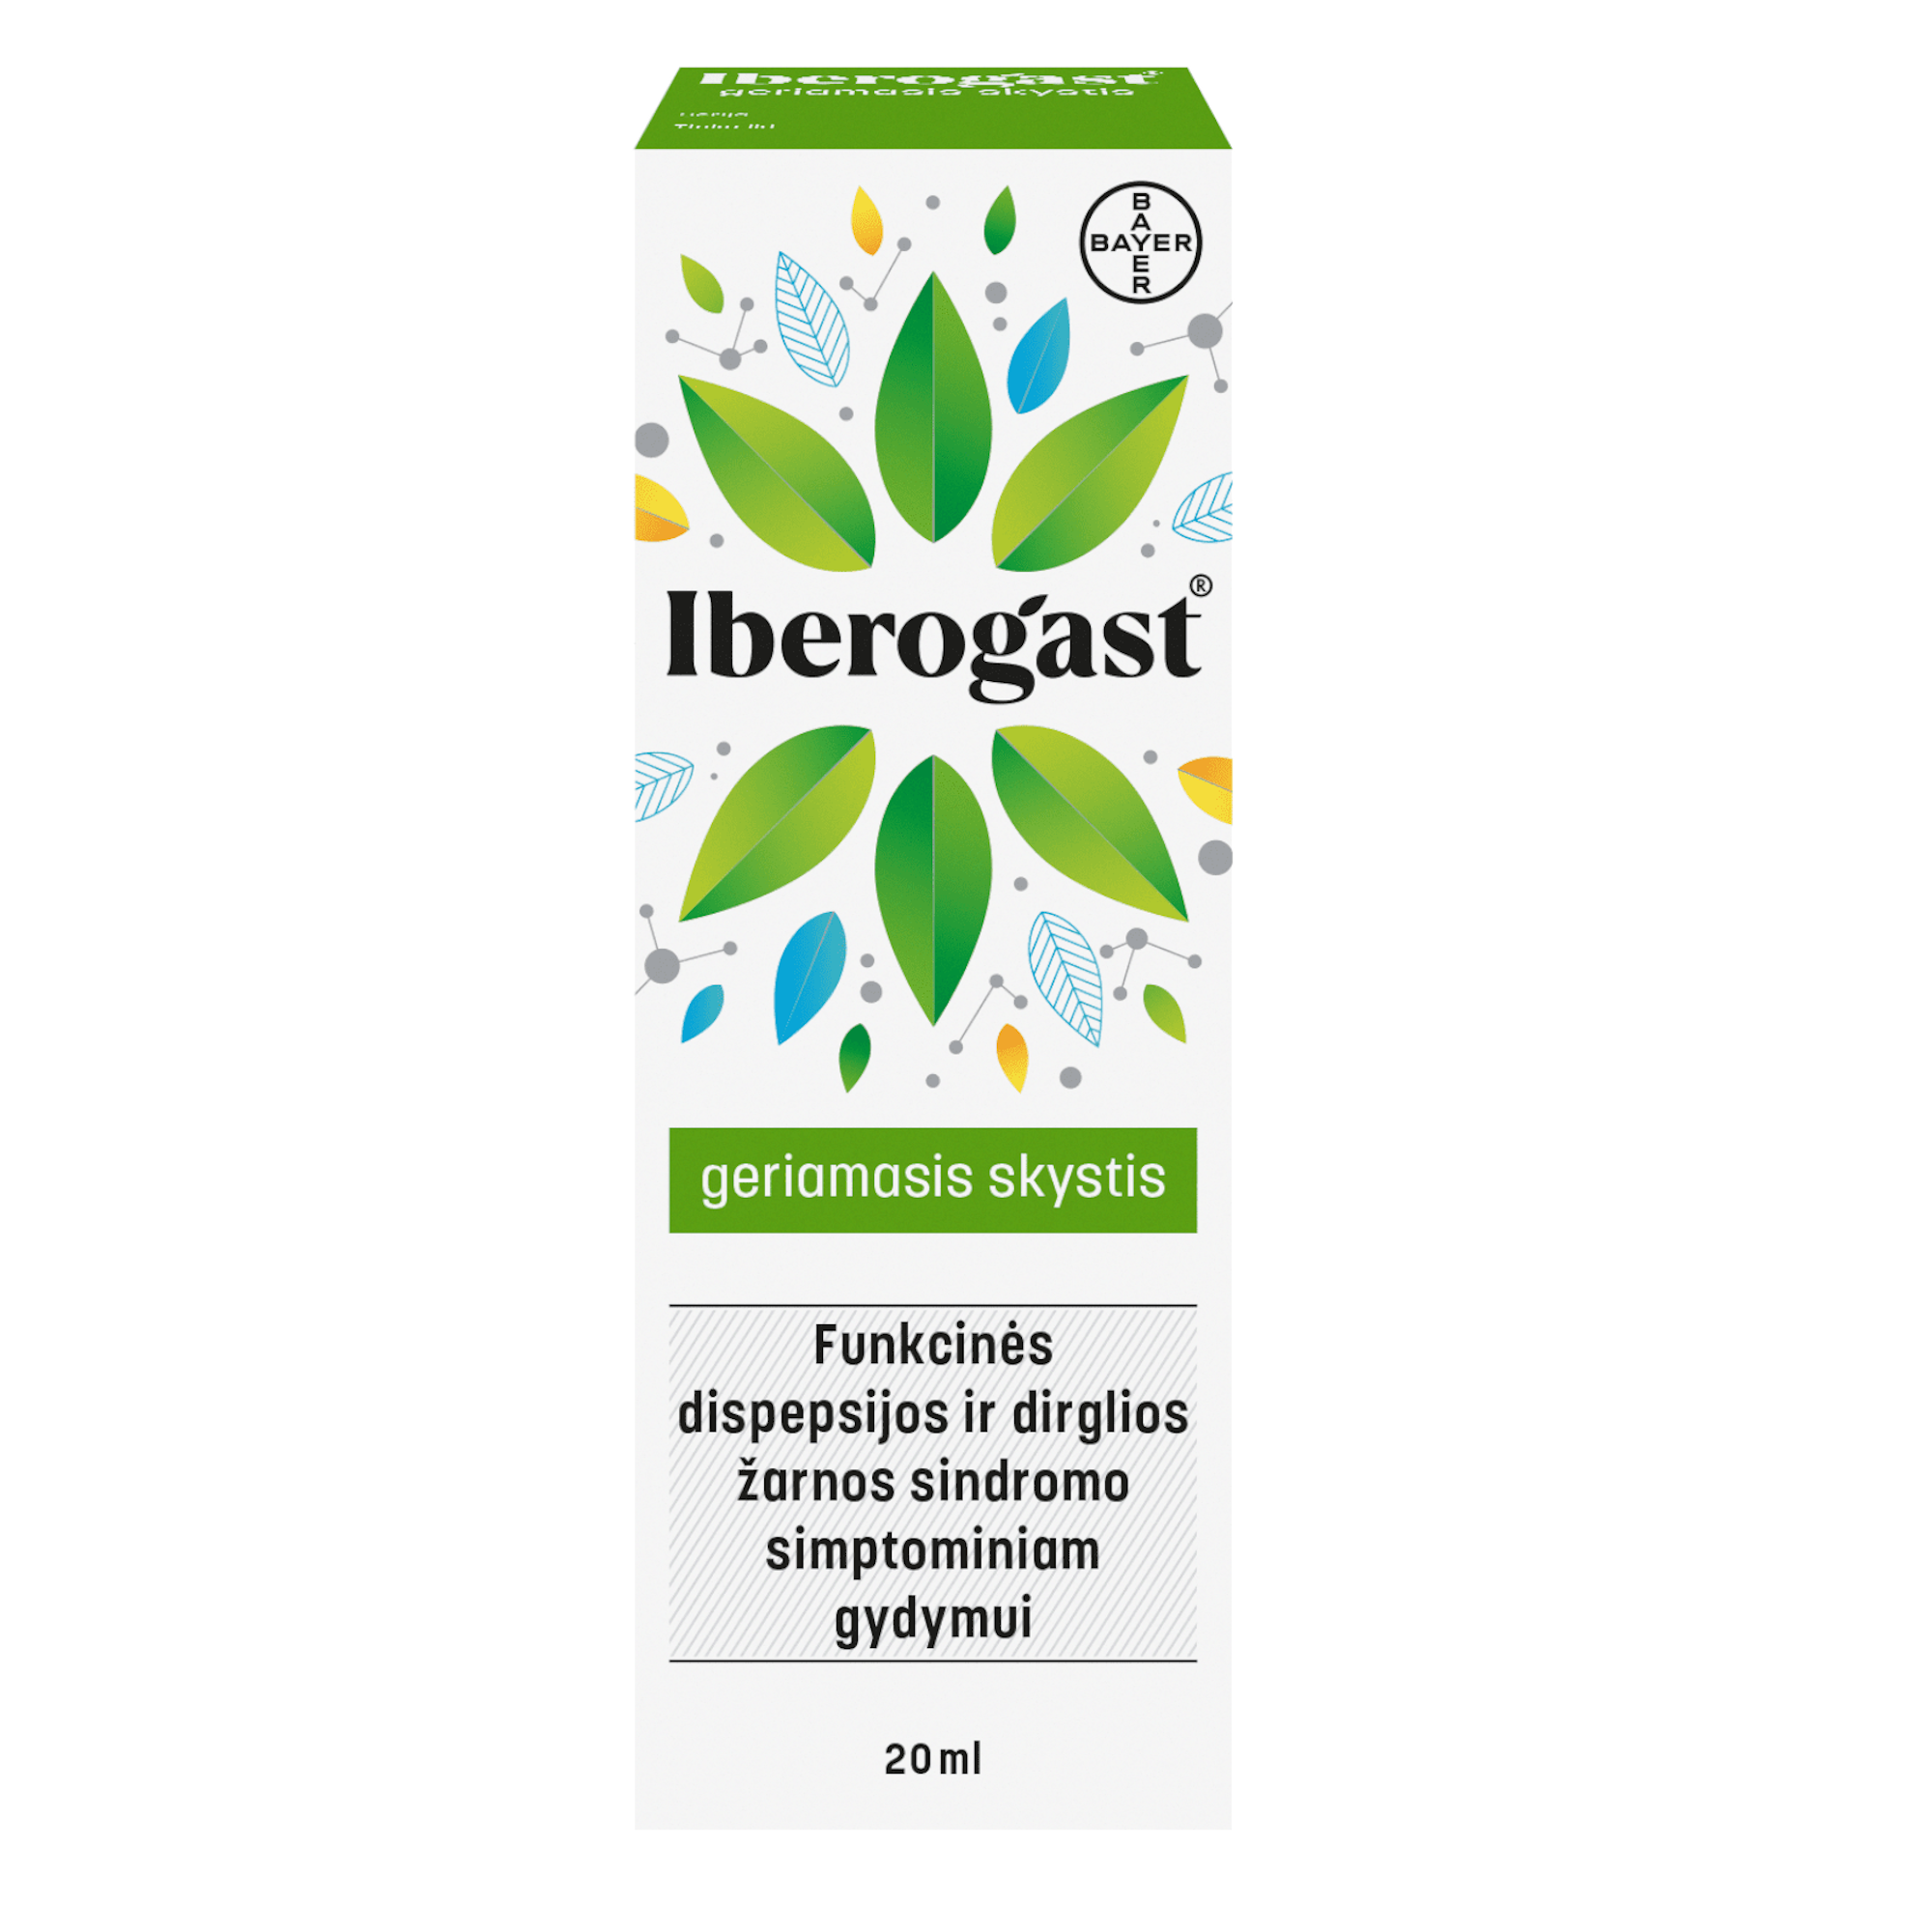 Iberogast 9 Herbs Treatment